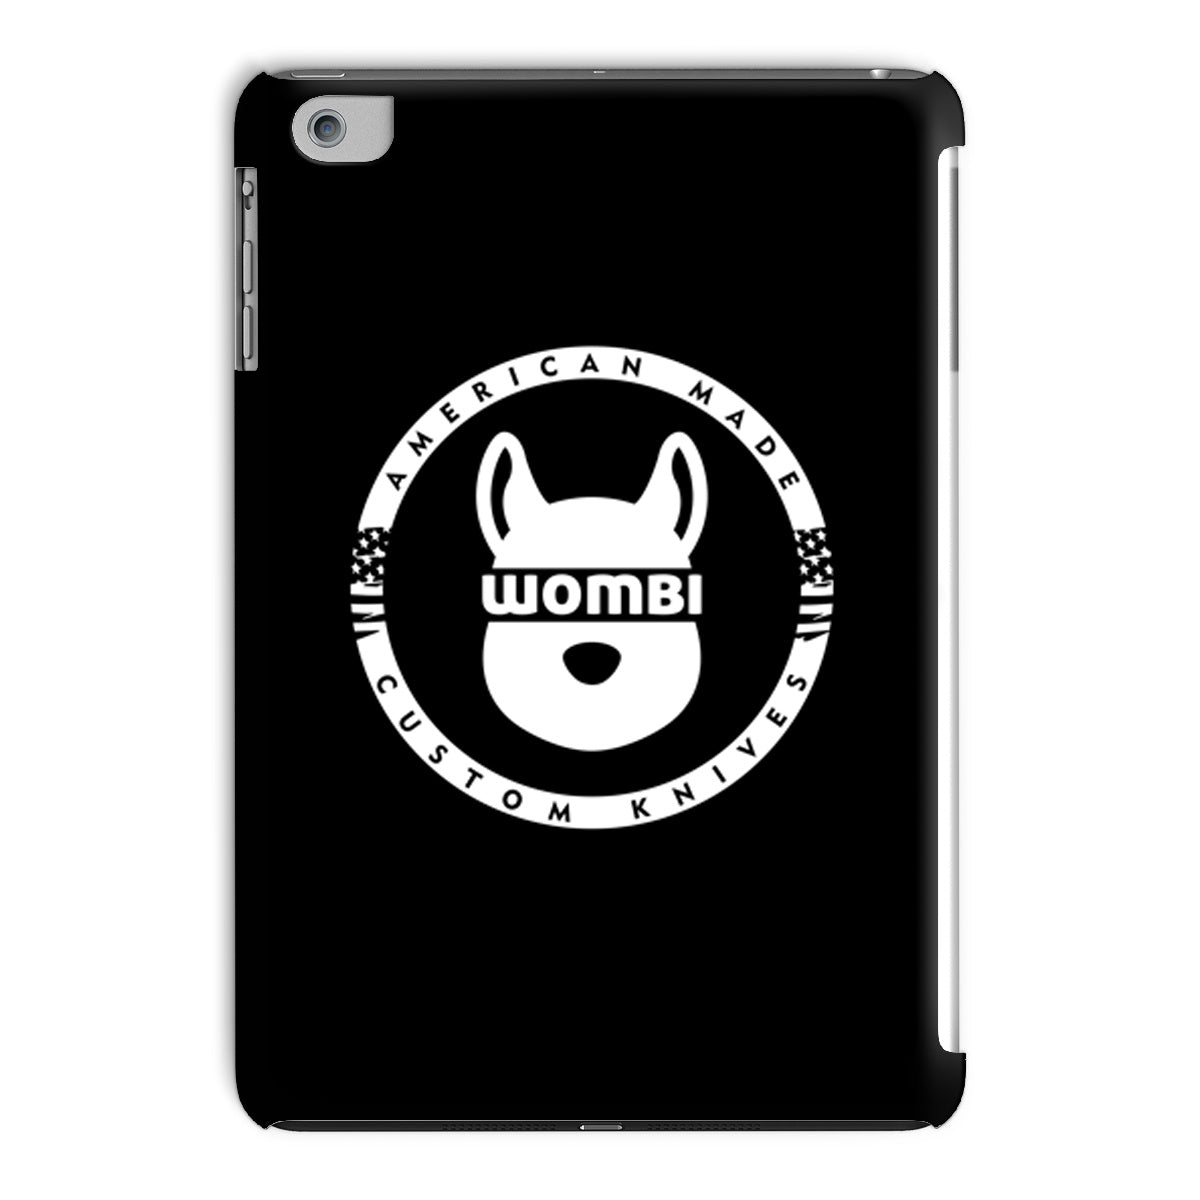 Wombi Tablet Cases